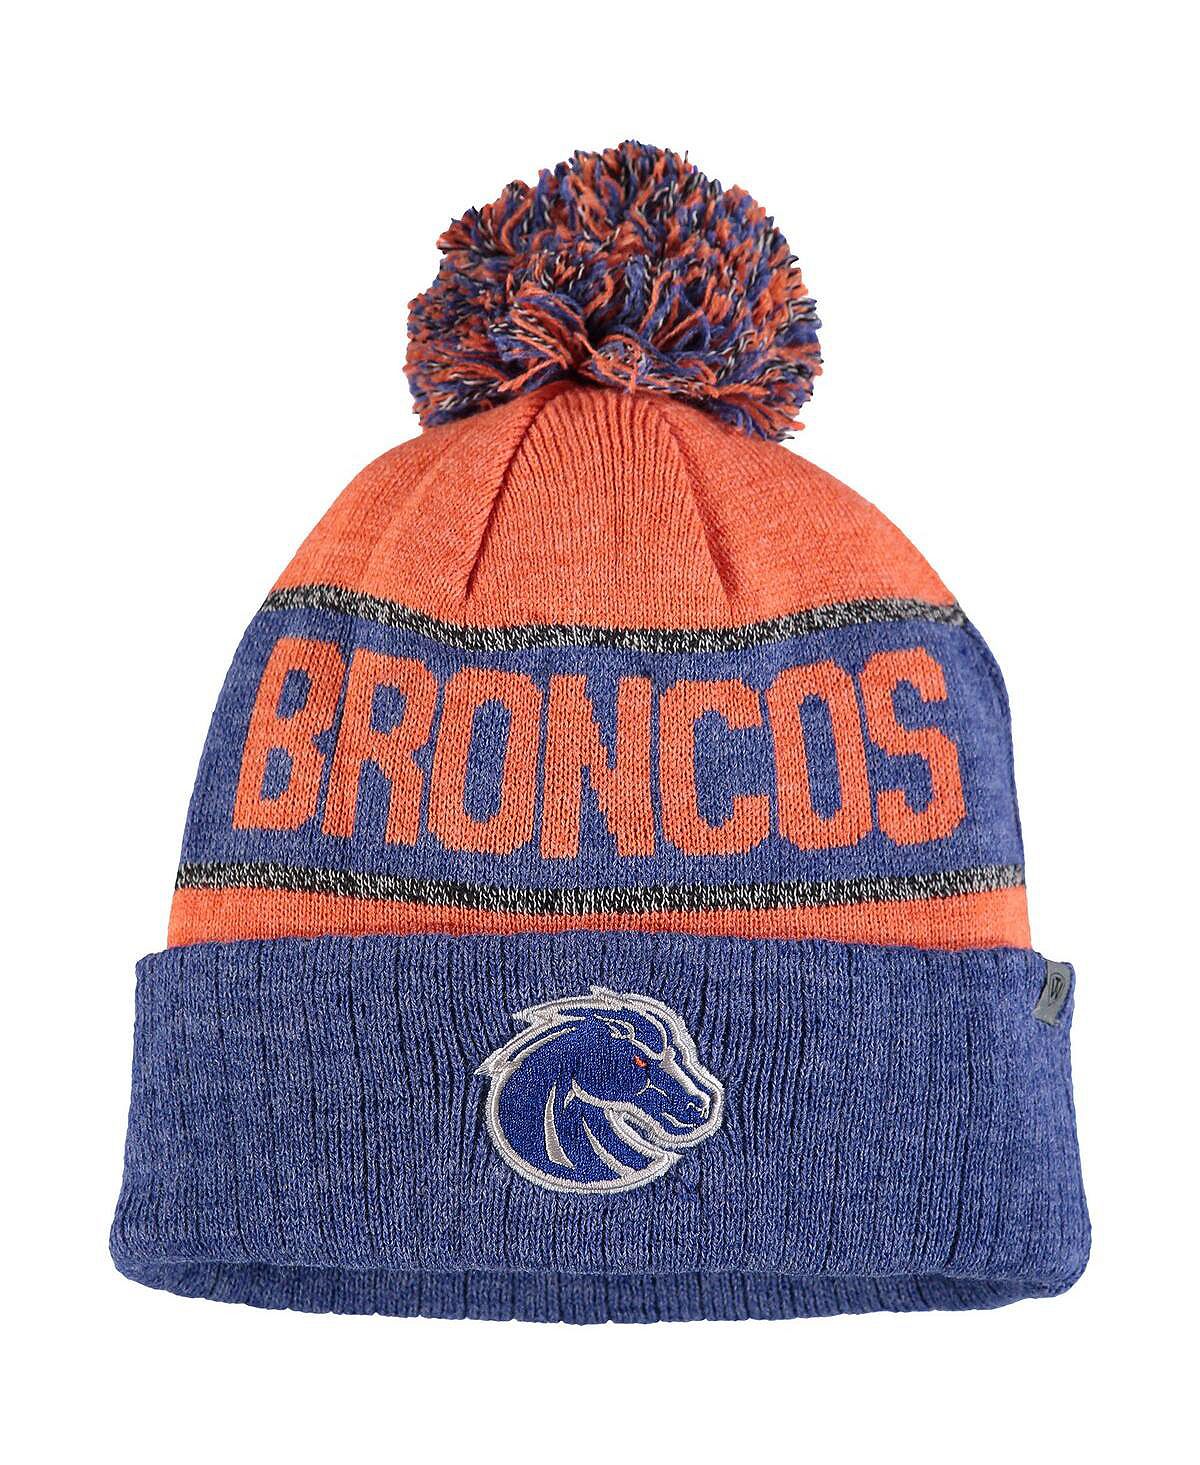 Мужская оранжево-синяя вязаная шапка Boise State Broncos Below Zero с манжетами и помпоном Top of the World